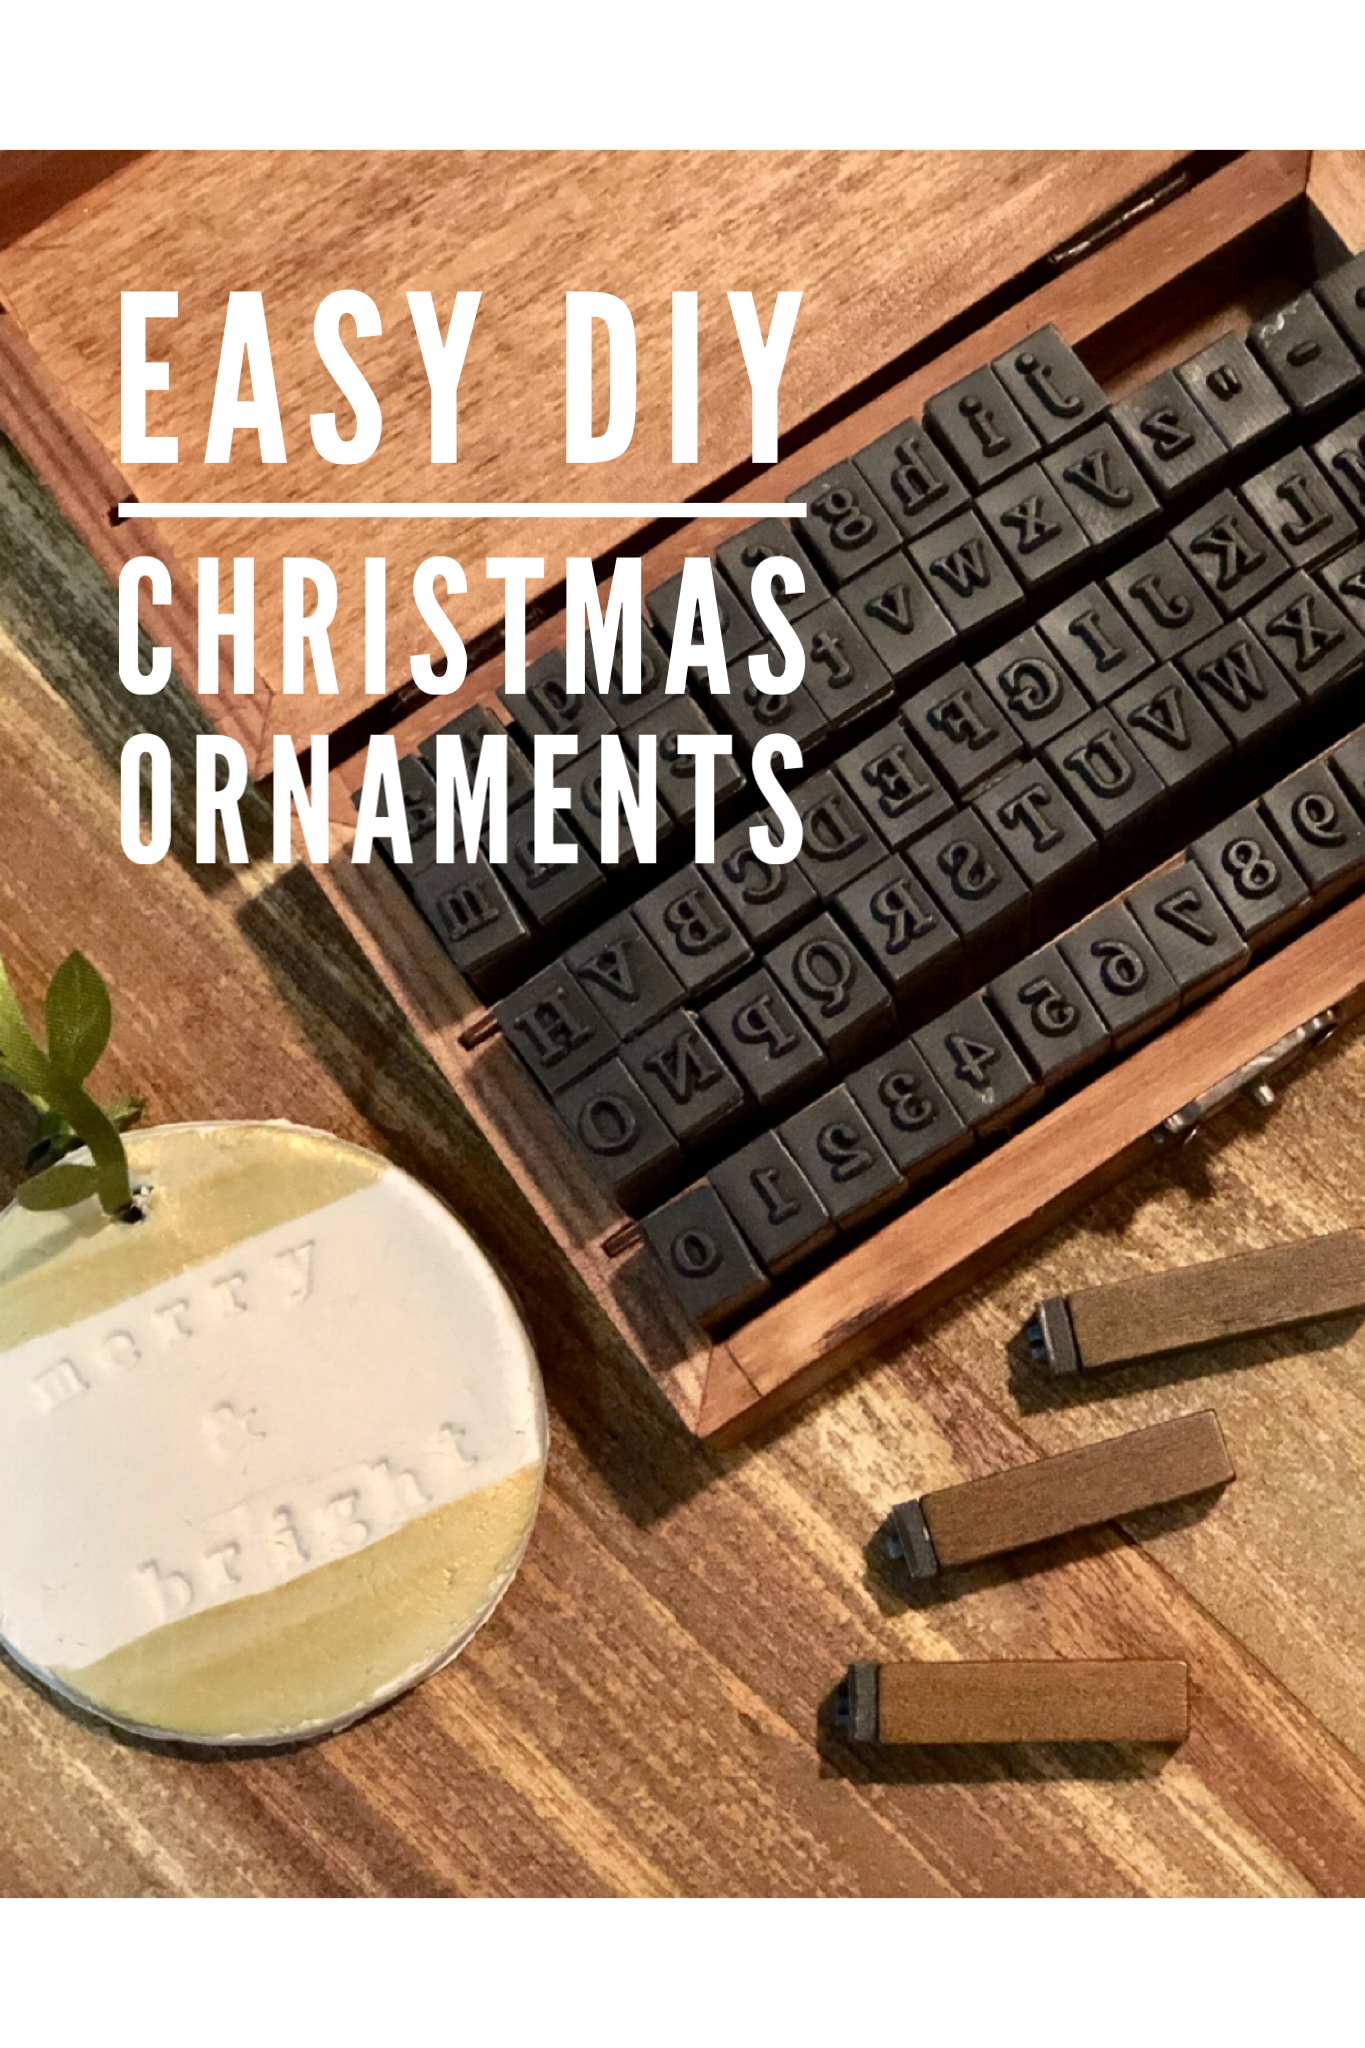 easy diy Christmas ornaments